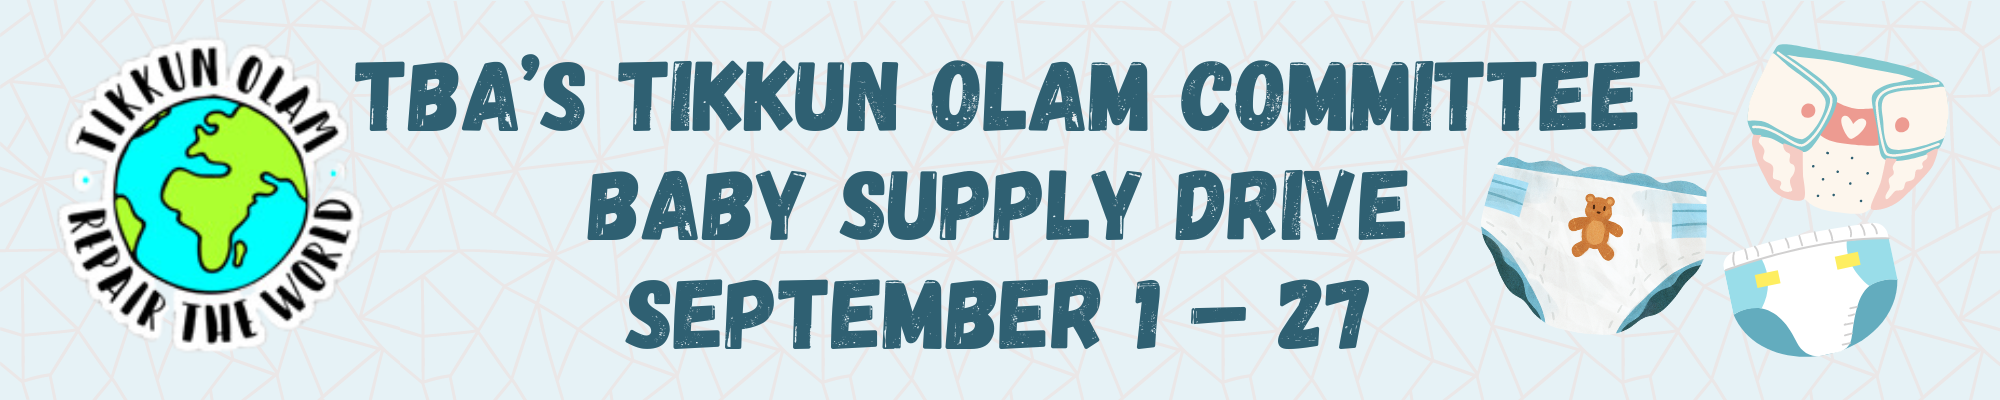 TBA’s Tikkun Olam Committee Baby Supply Drive September 1 – 27